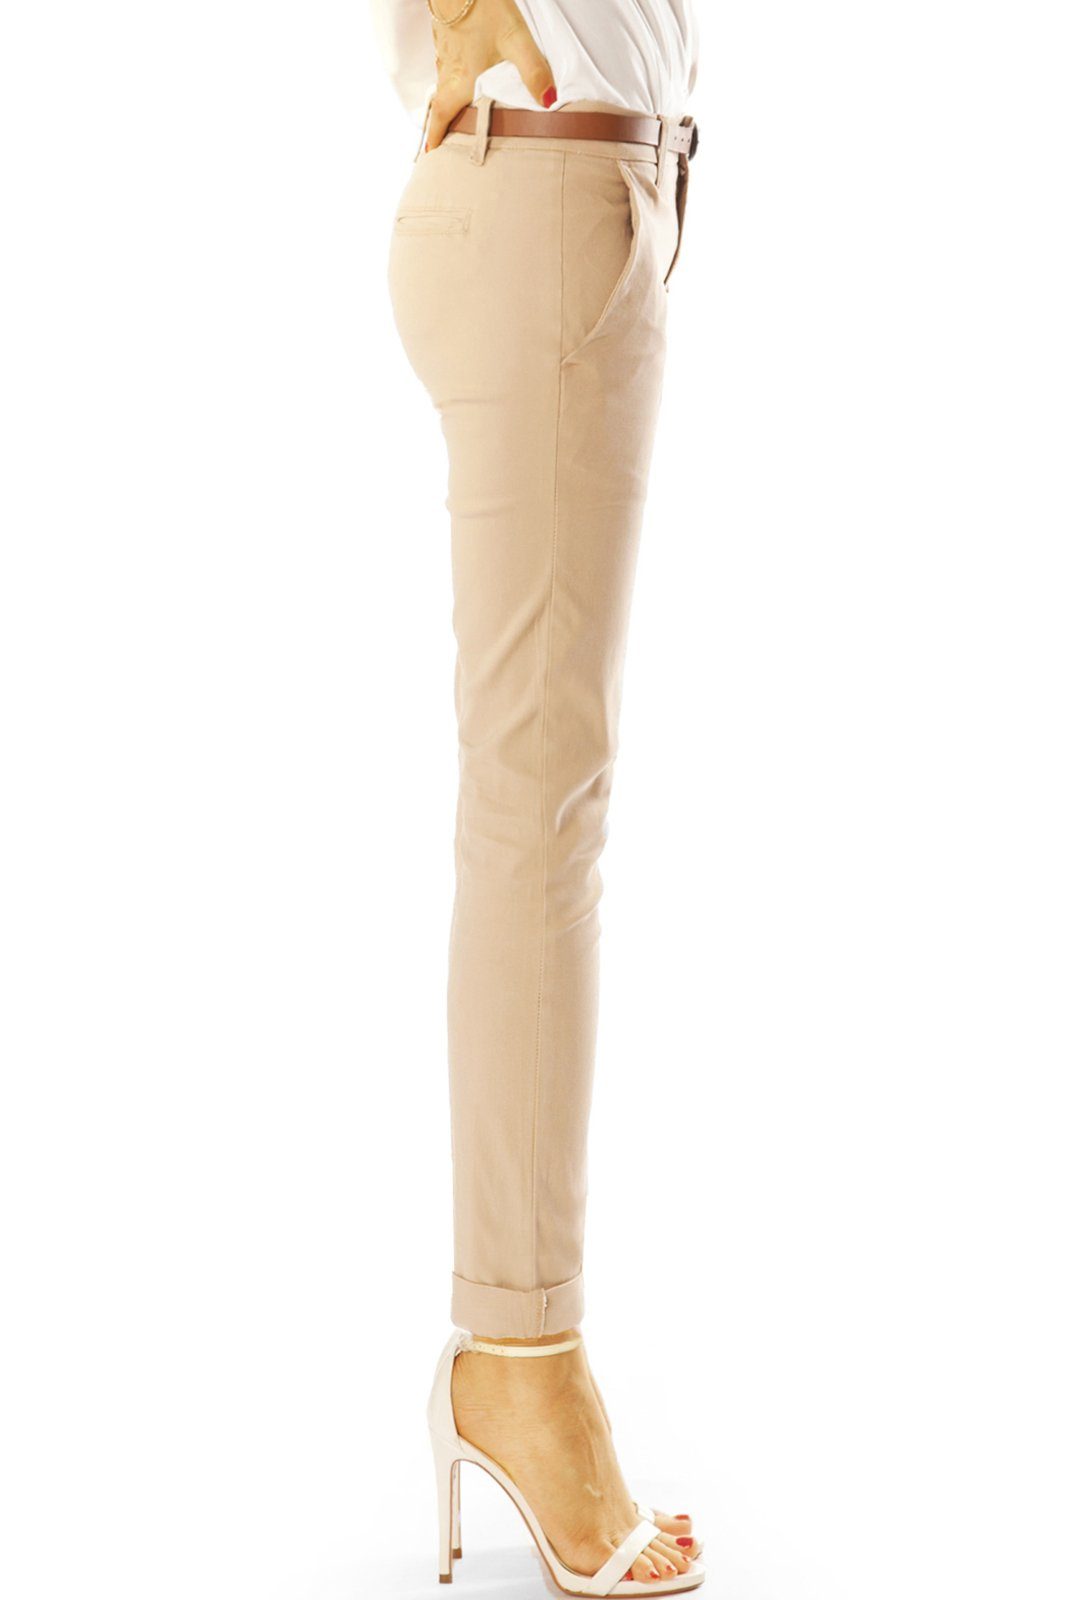 be styled Chinohose Hüftige Chino Hüfthosen mit Stoffhosen j10m-3 - in schwarz Damen Hose Unifarben - Stretch